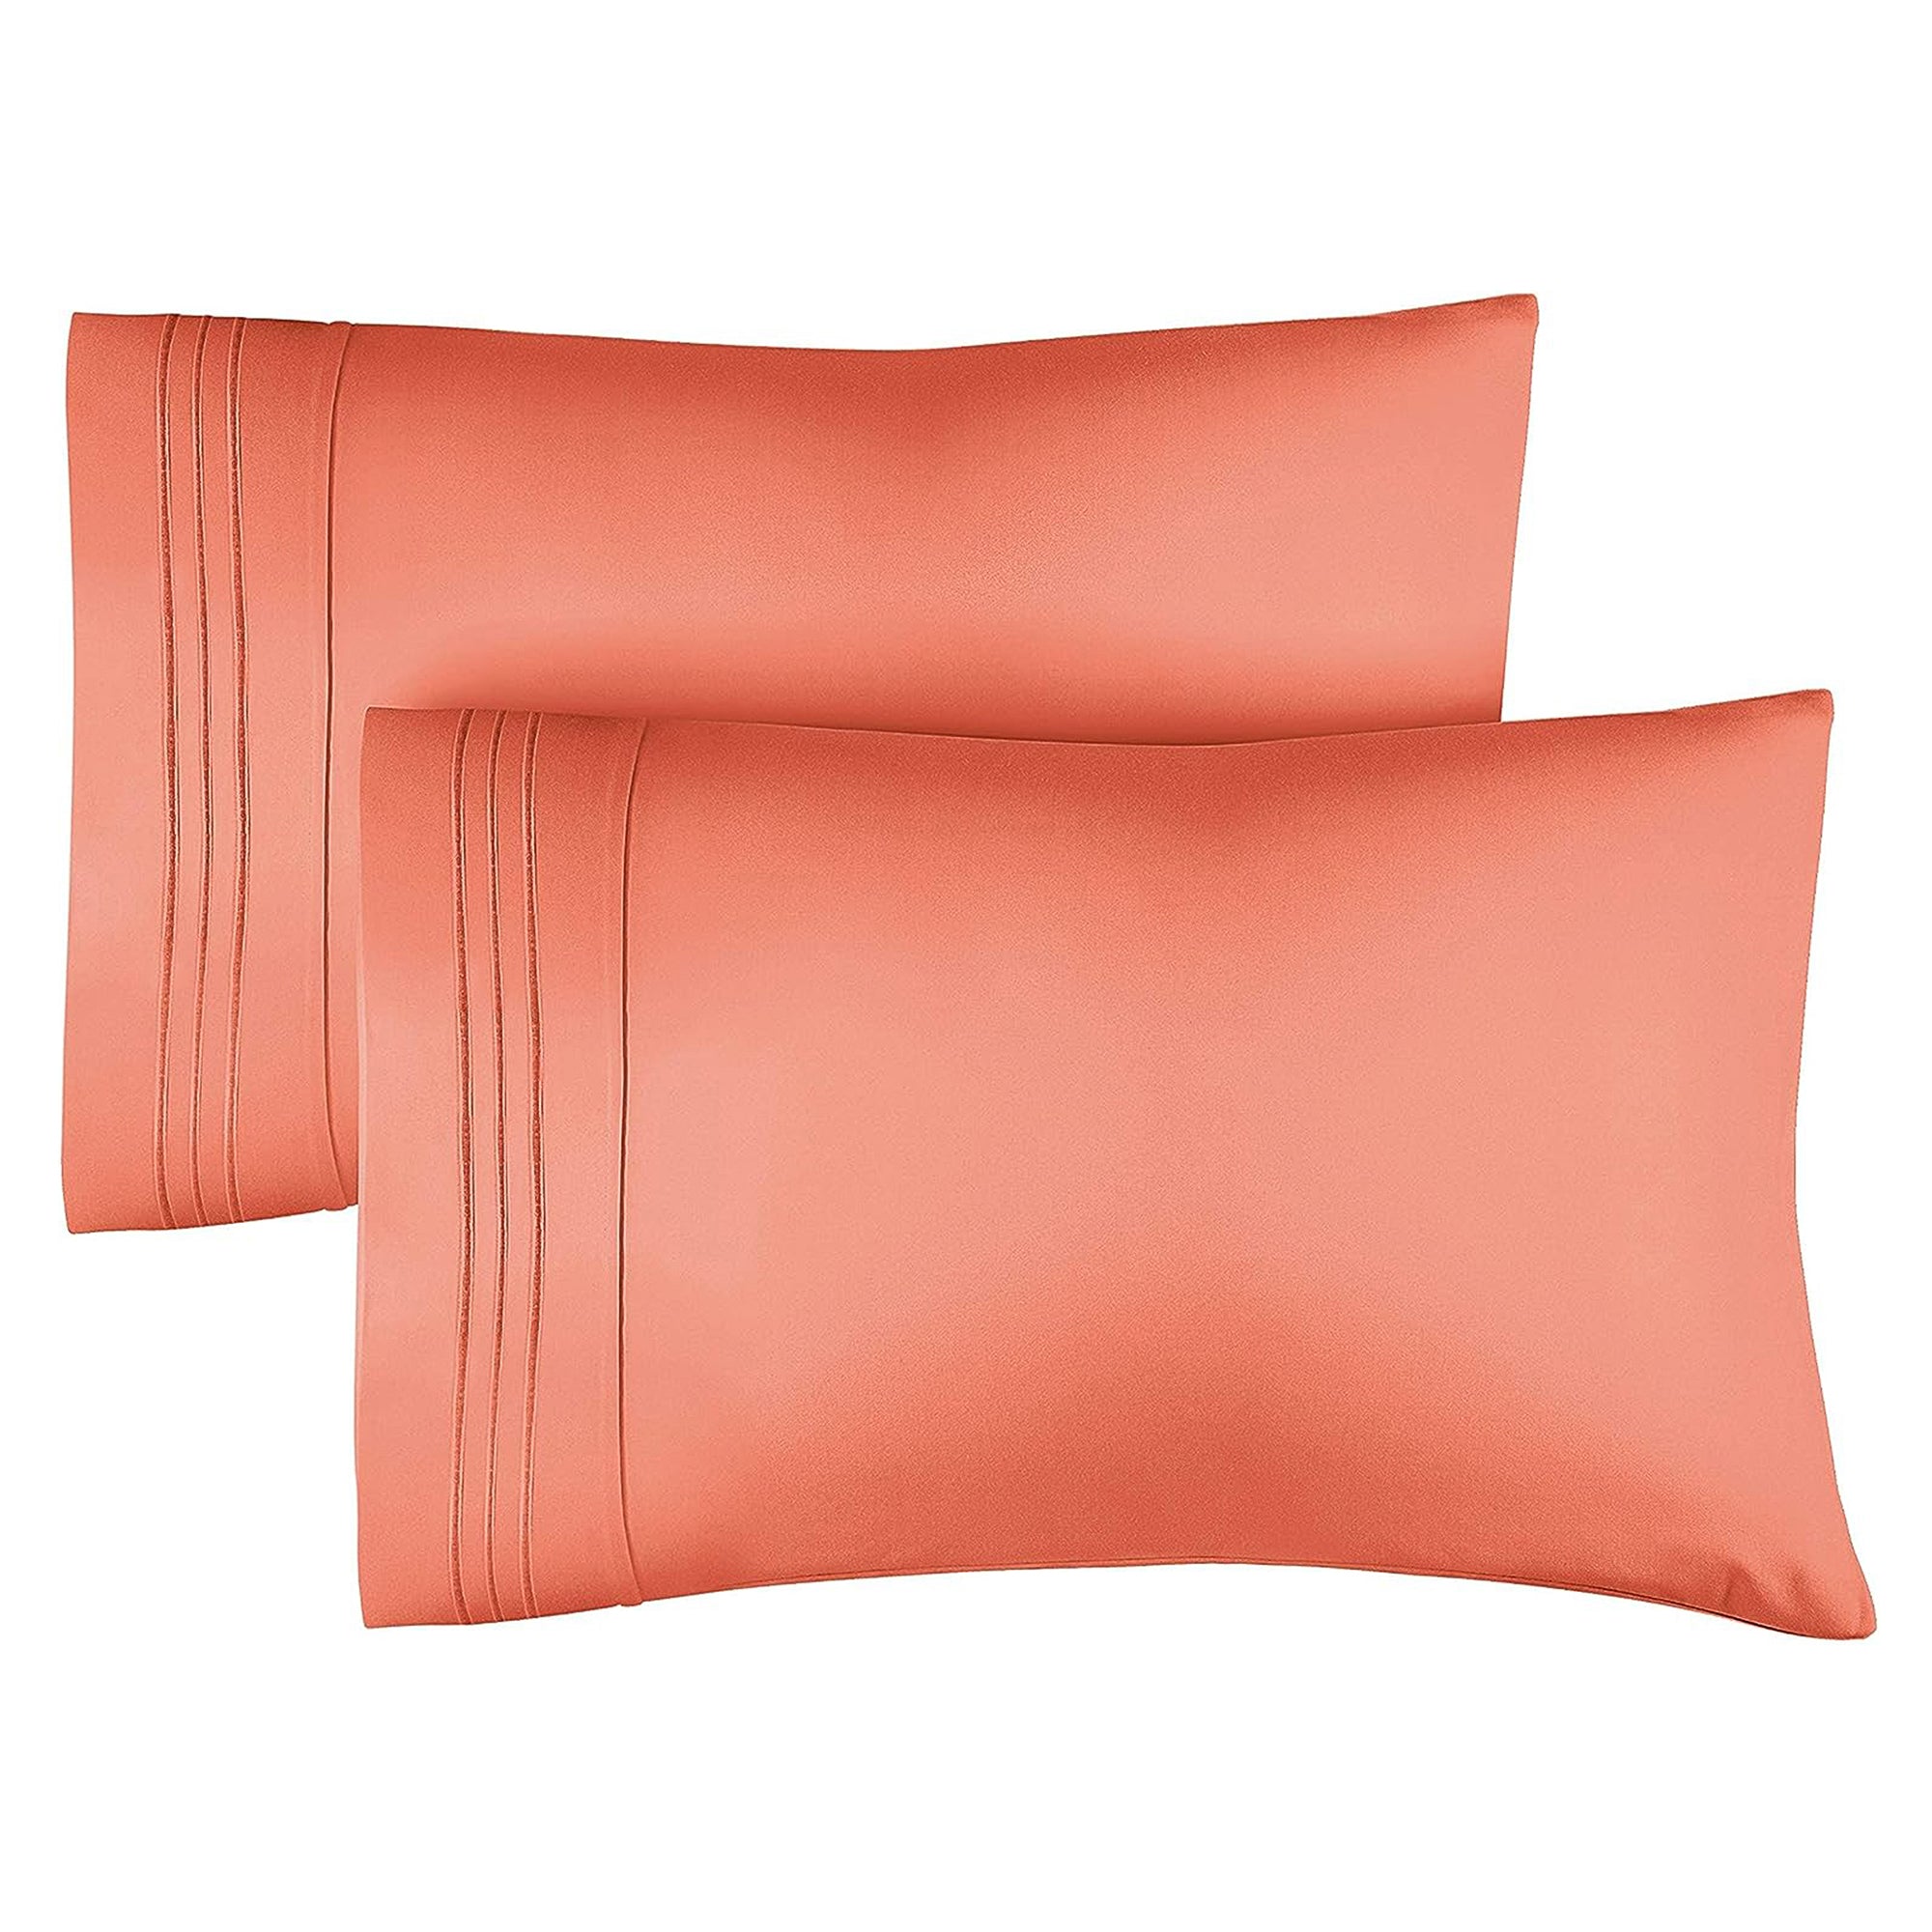 2 Pillowcase Set